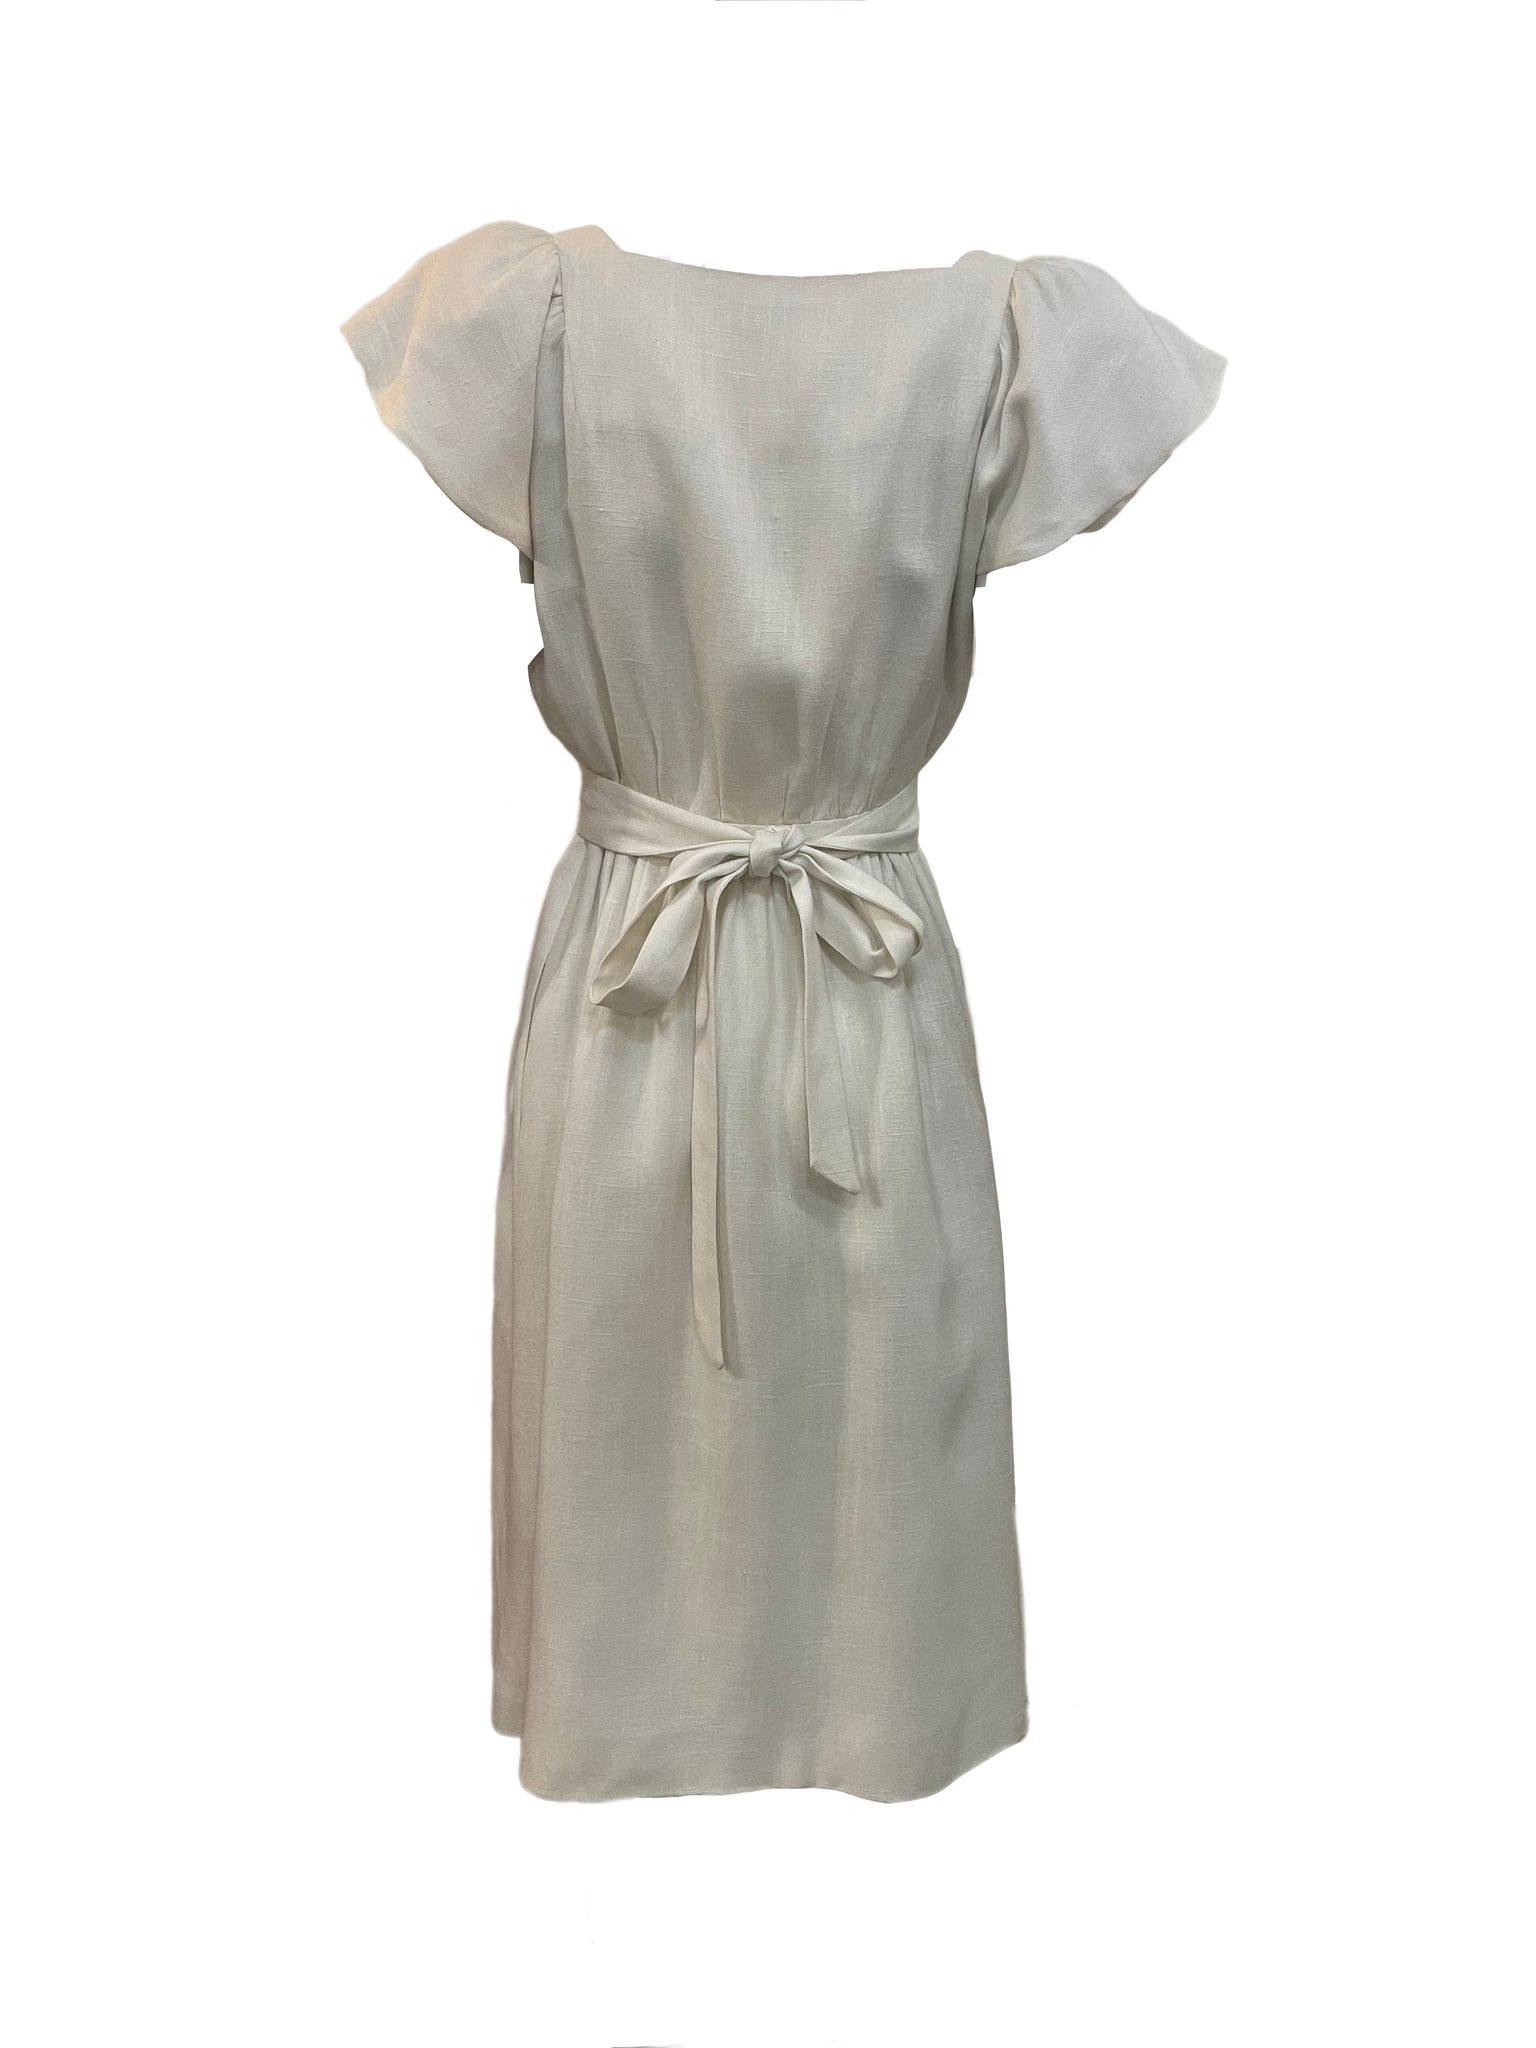 Halston 70s Summer  White Linen Pinafore Dress with Sash Belt BACK 3 of 4